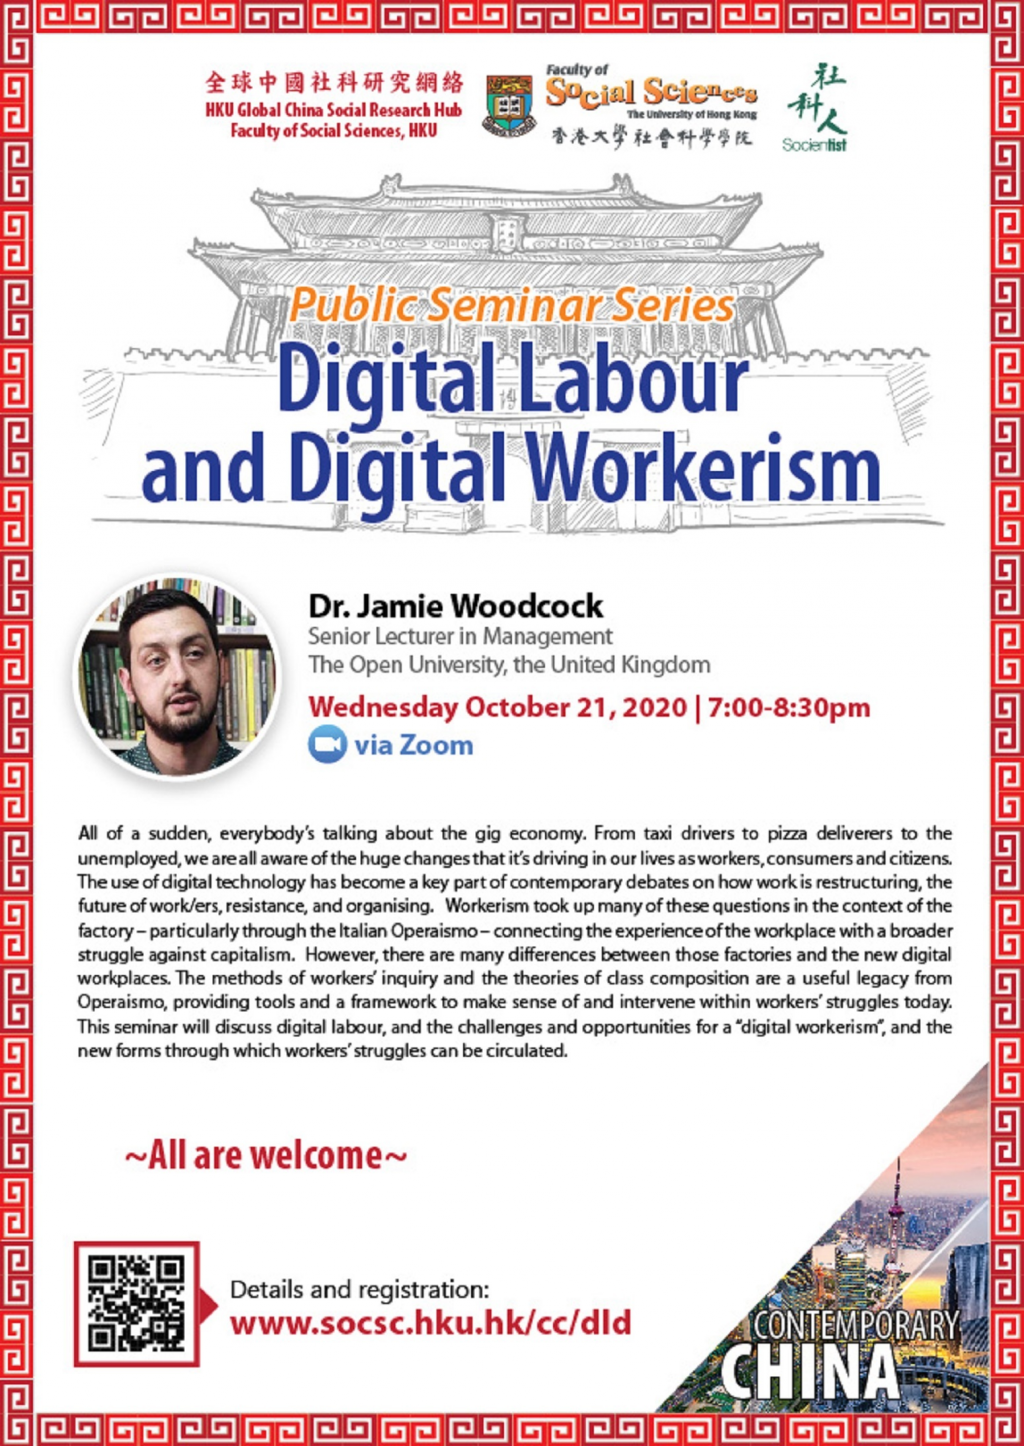 Global China Social Research Hub Public Seminar Series: Digital Labour and Digital Workerism (October 21, 7:00pm)